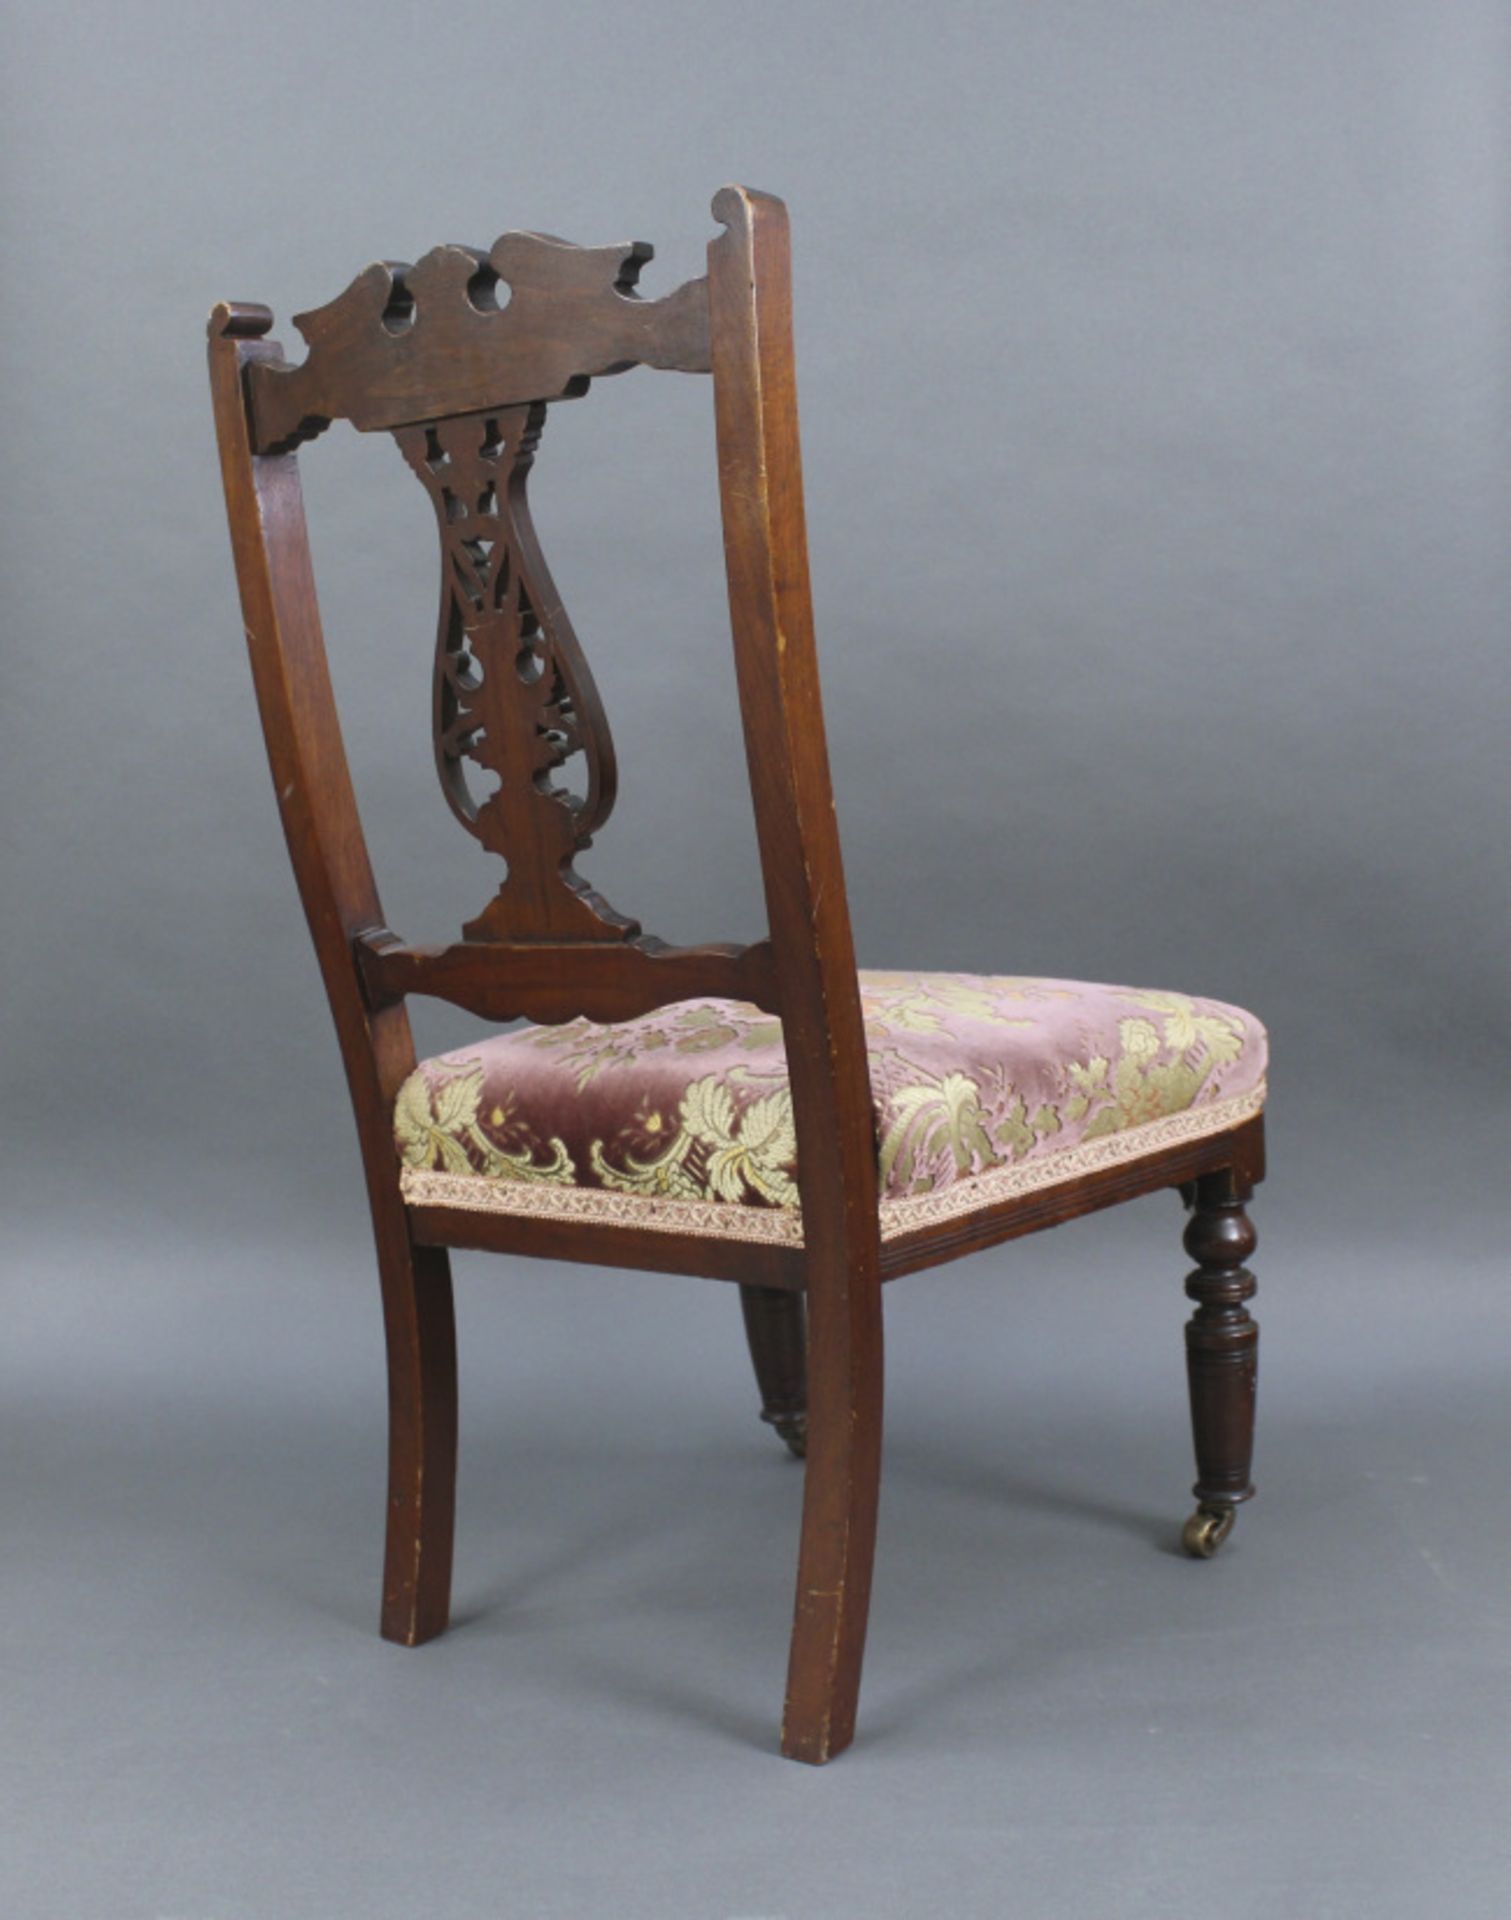 Edwardian Mahogany Nursing Chair with Upholstered Seat - Image 3 of 7